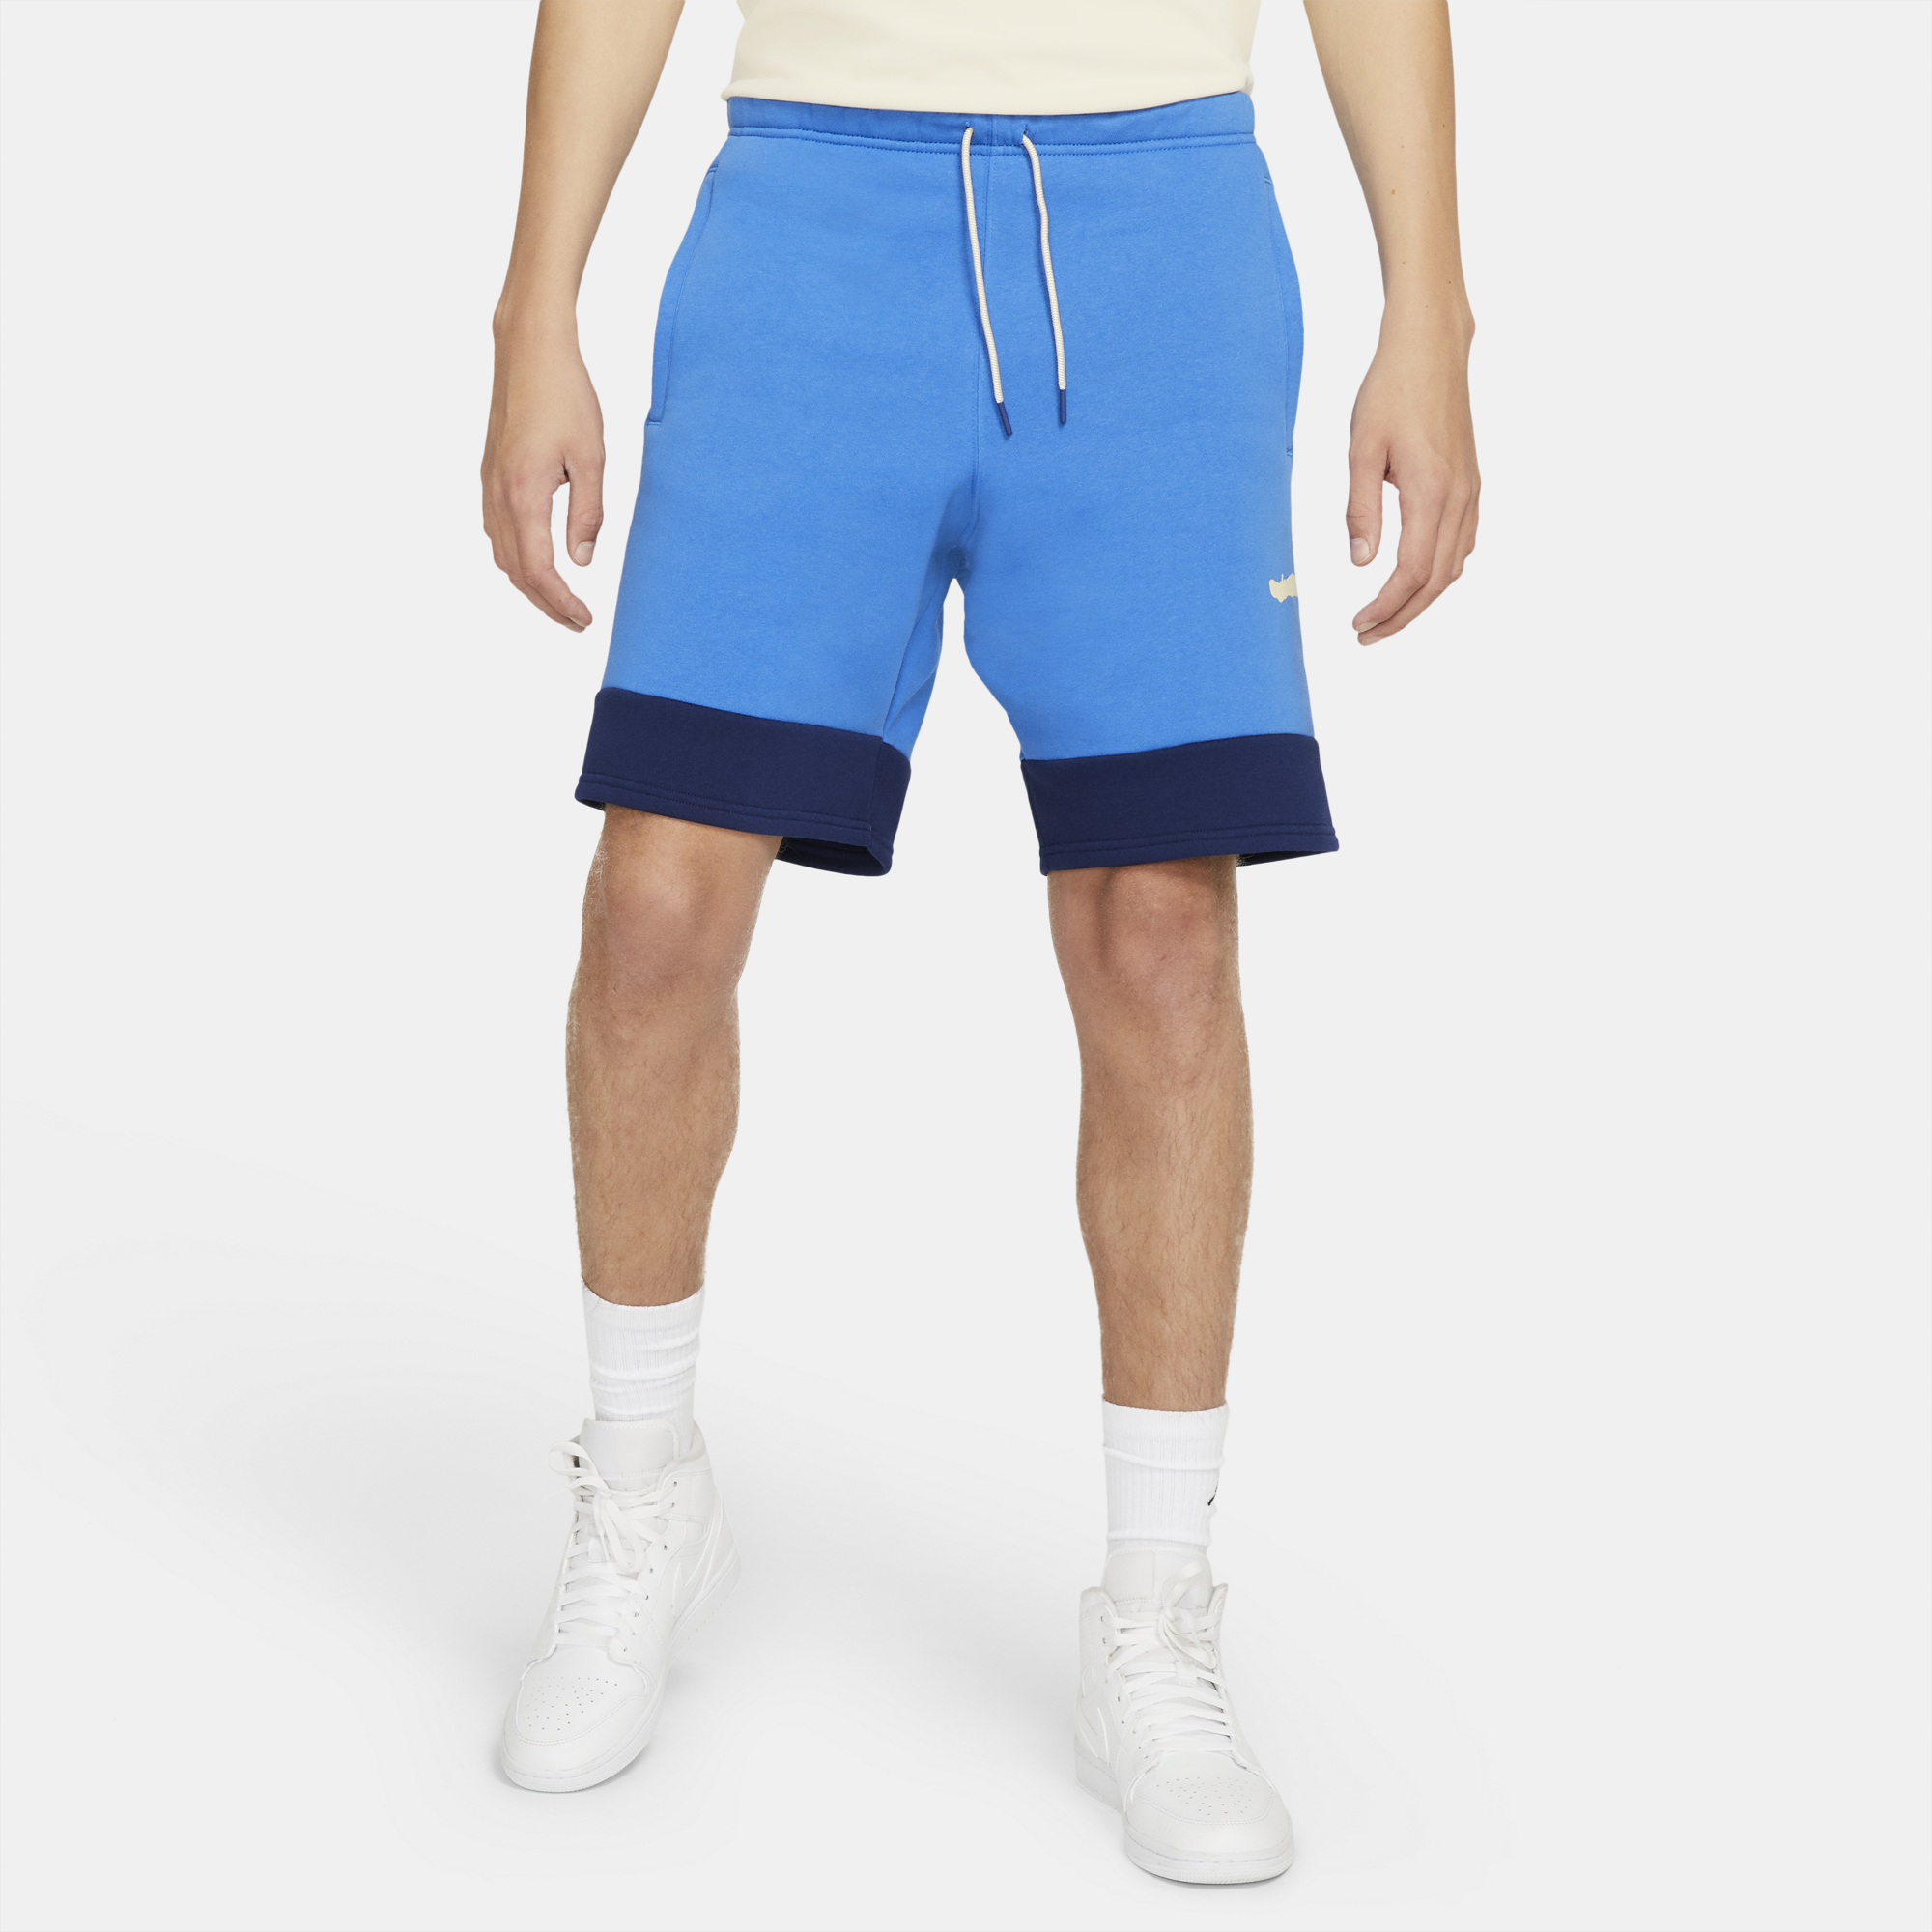 blue and white jordan shorts